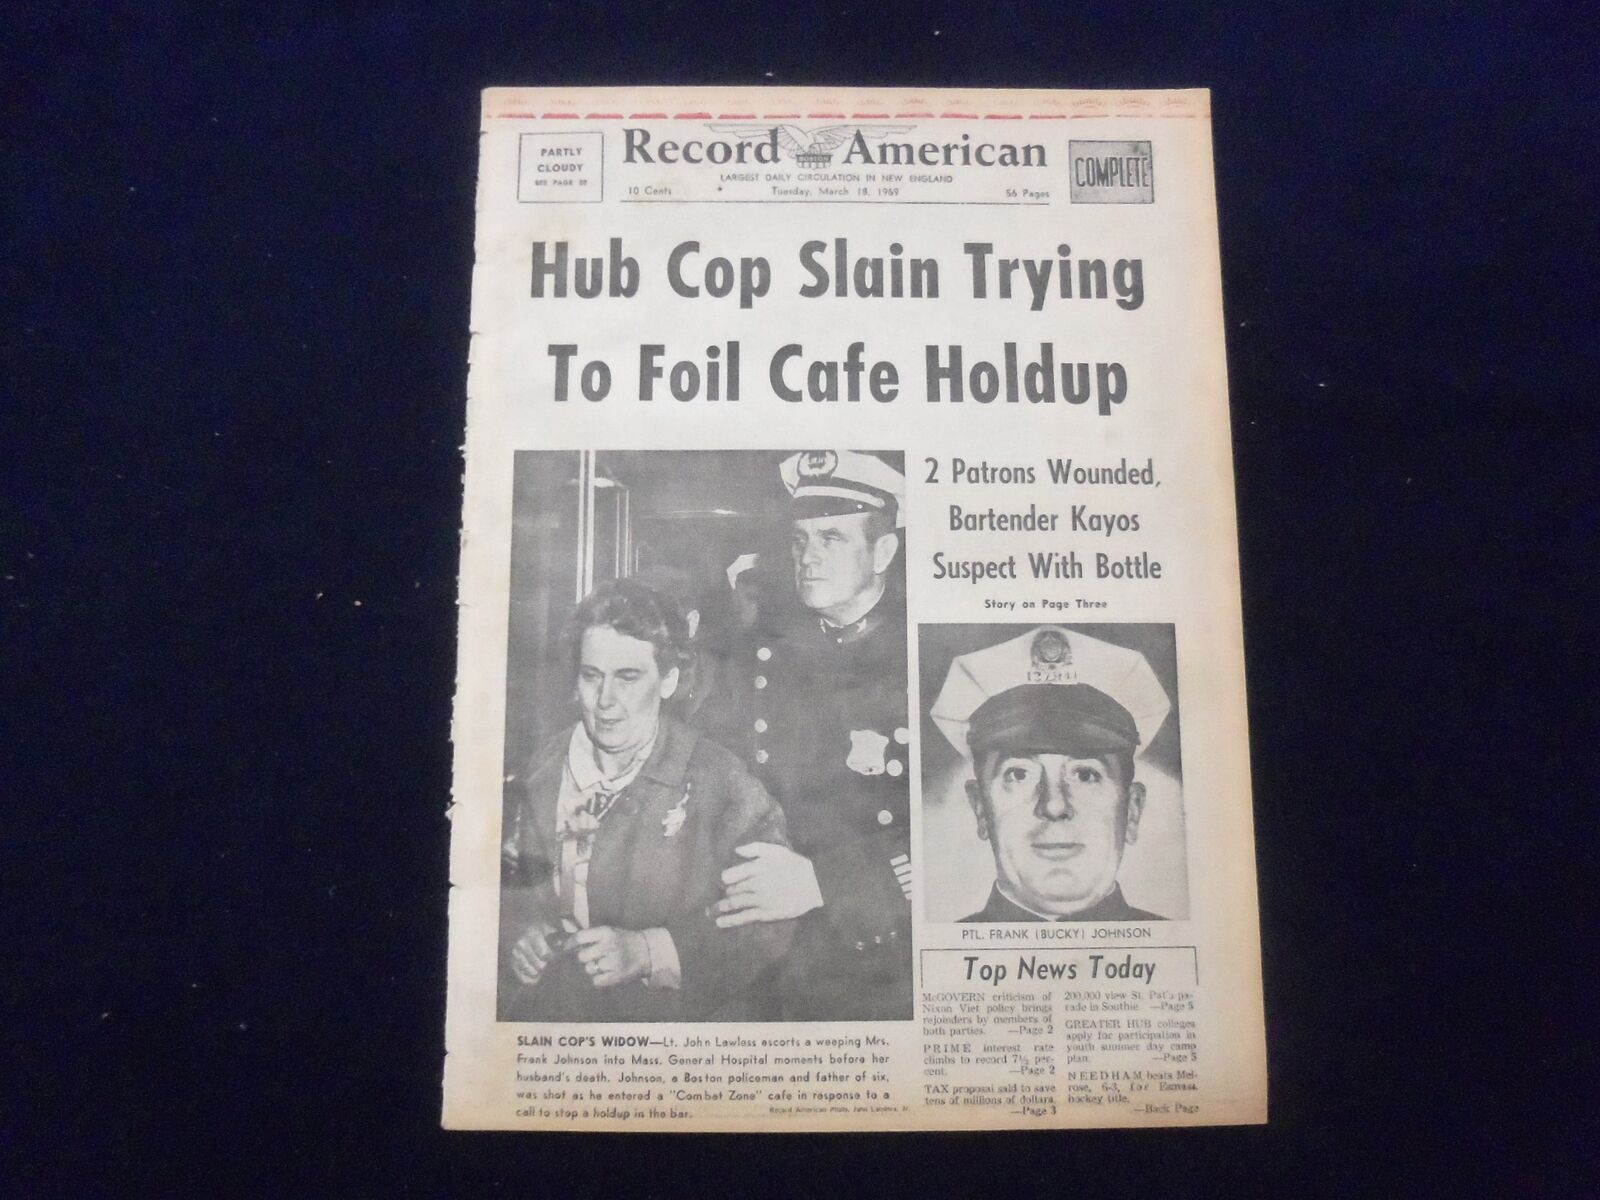 1969 MAR 18 BOSTON RECORD AMERICAN NEWSPAPER - COP SLAIN IN CAFE HOLDUP -NP 6334